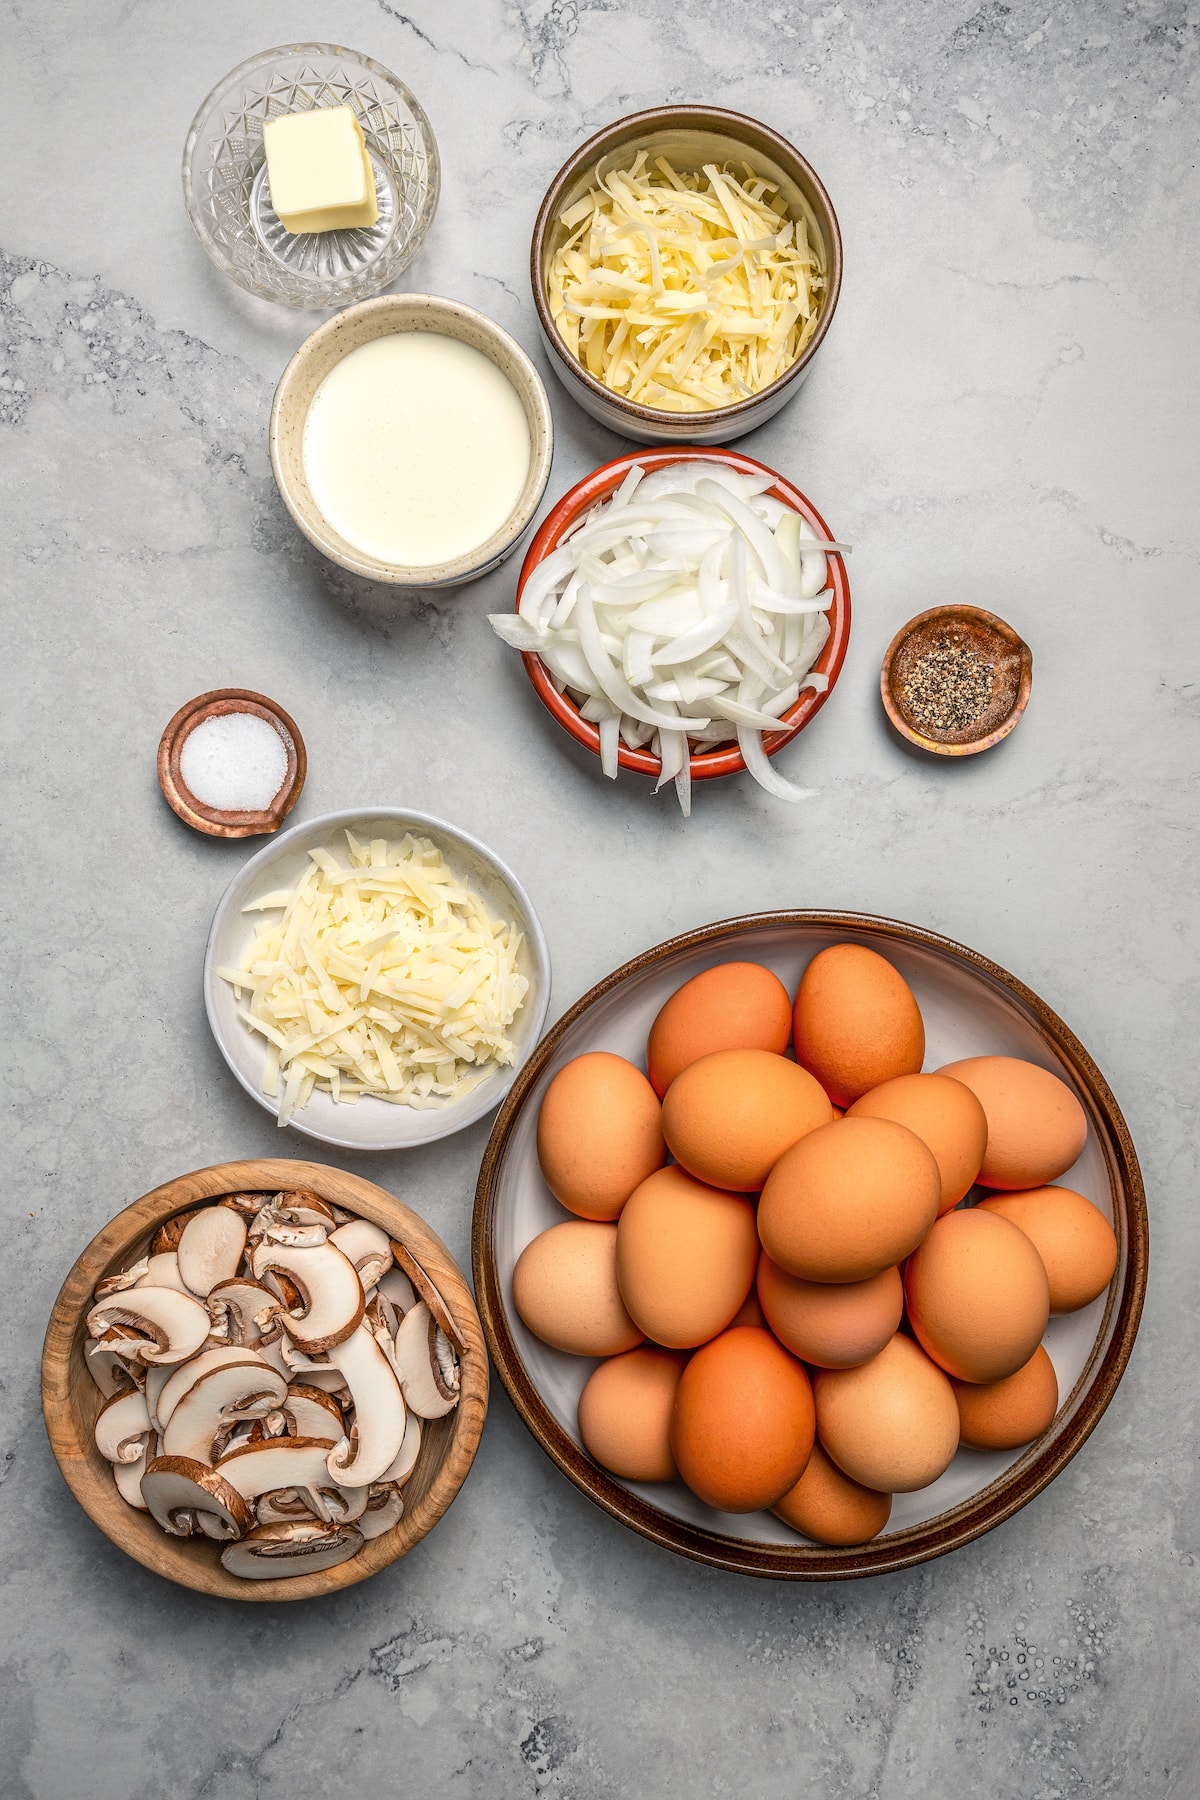 Ingredients for sheet pan eggs.